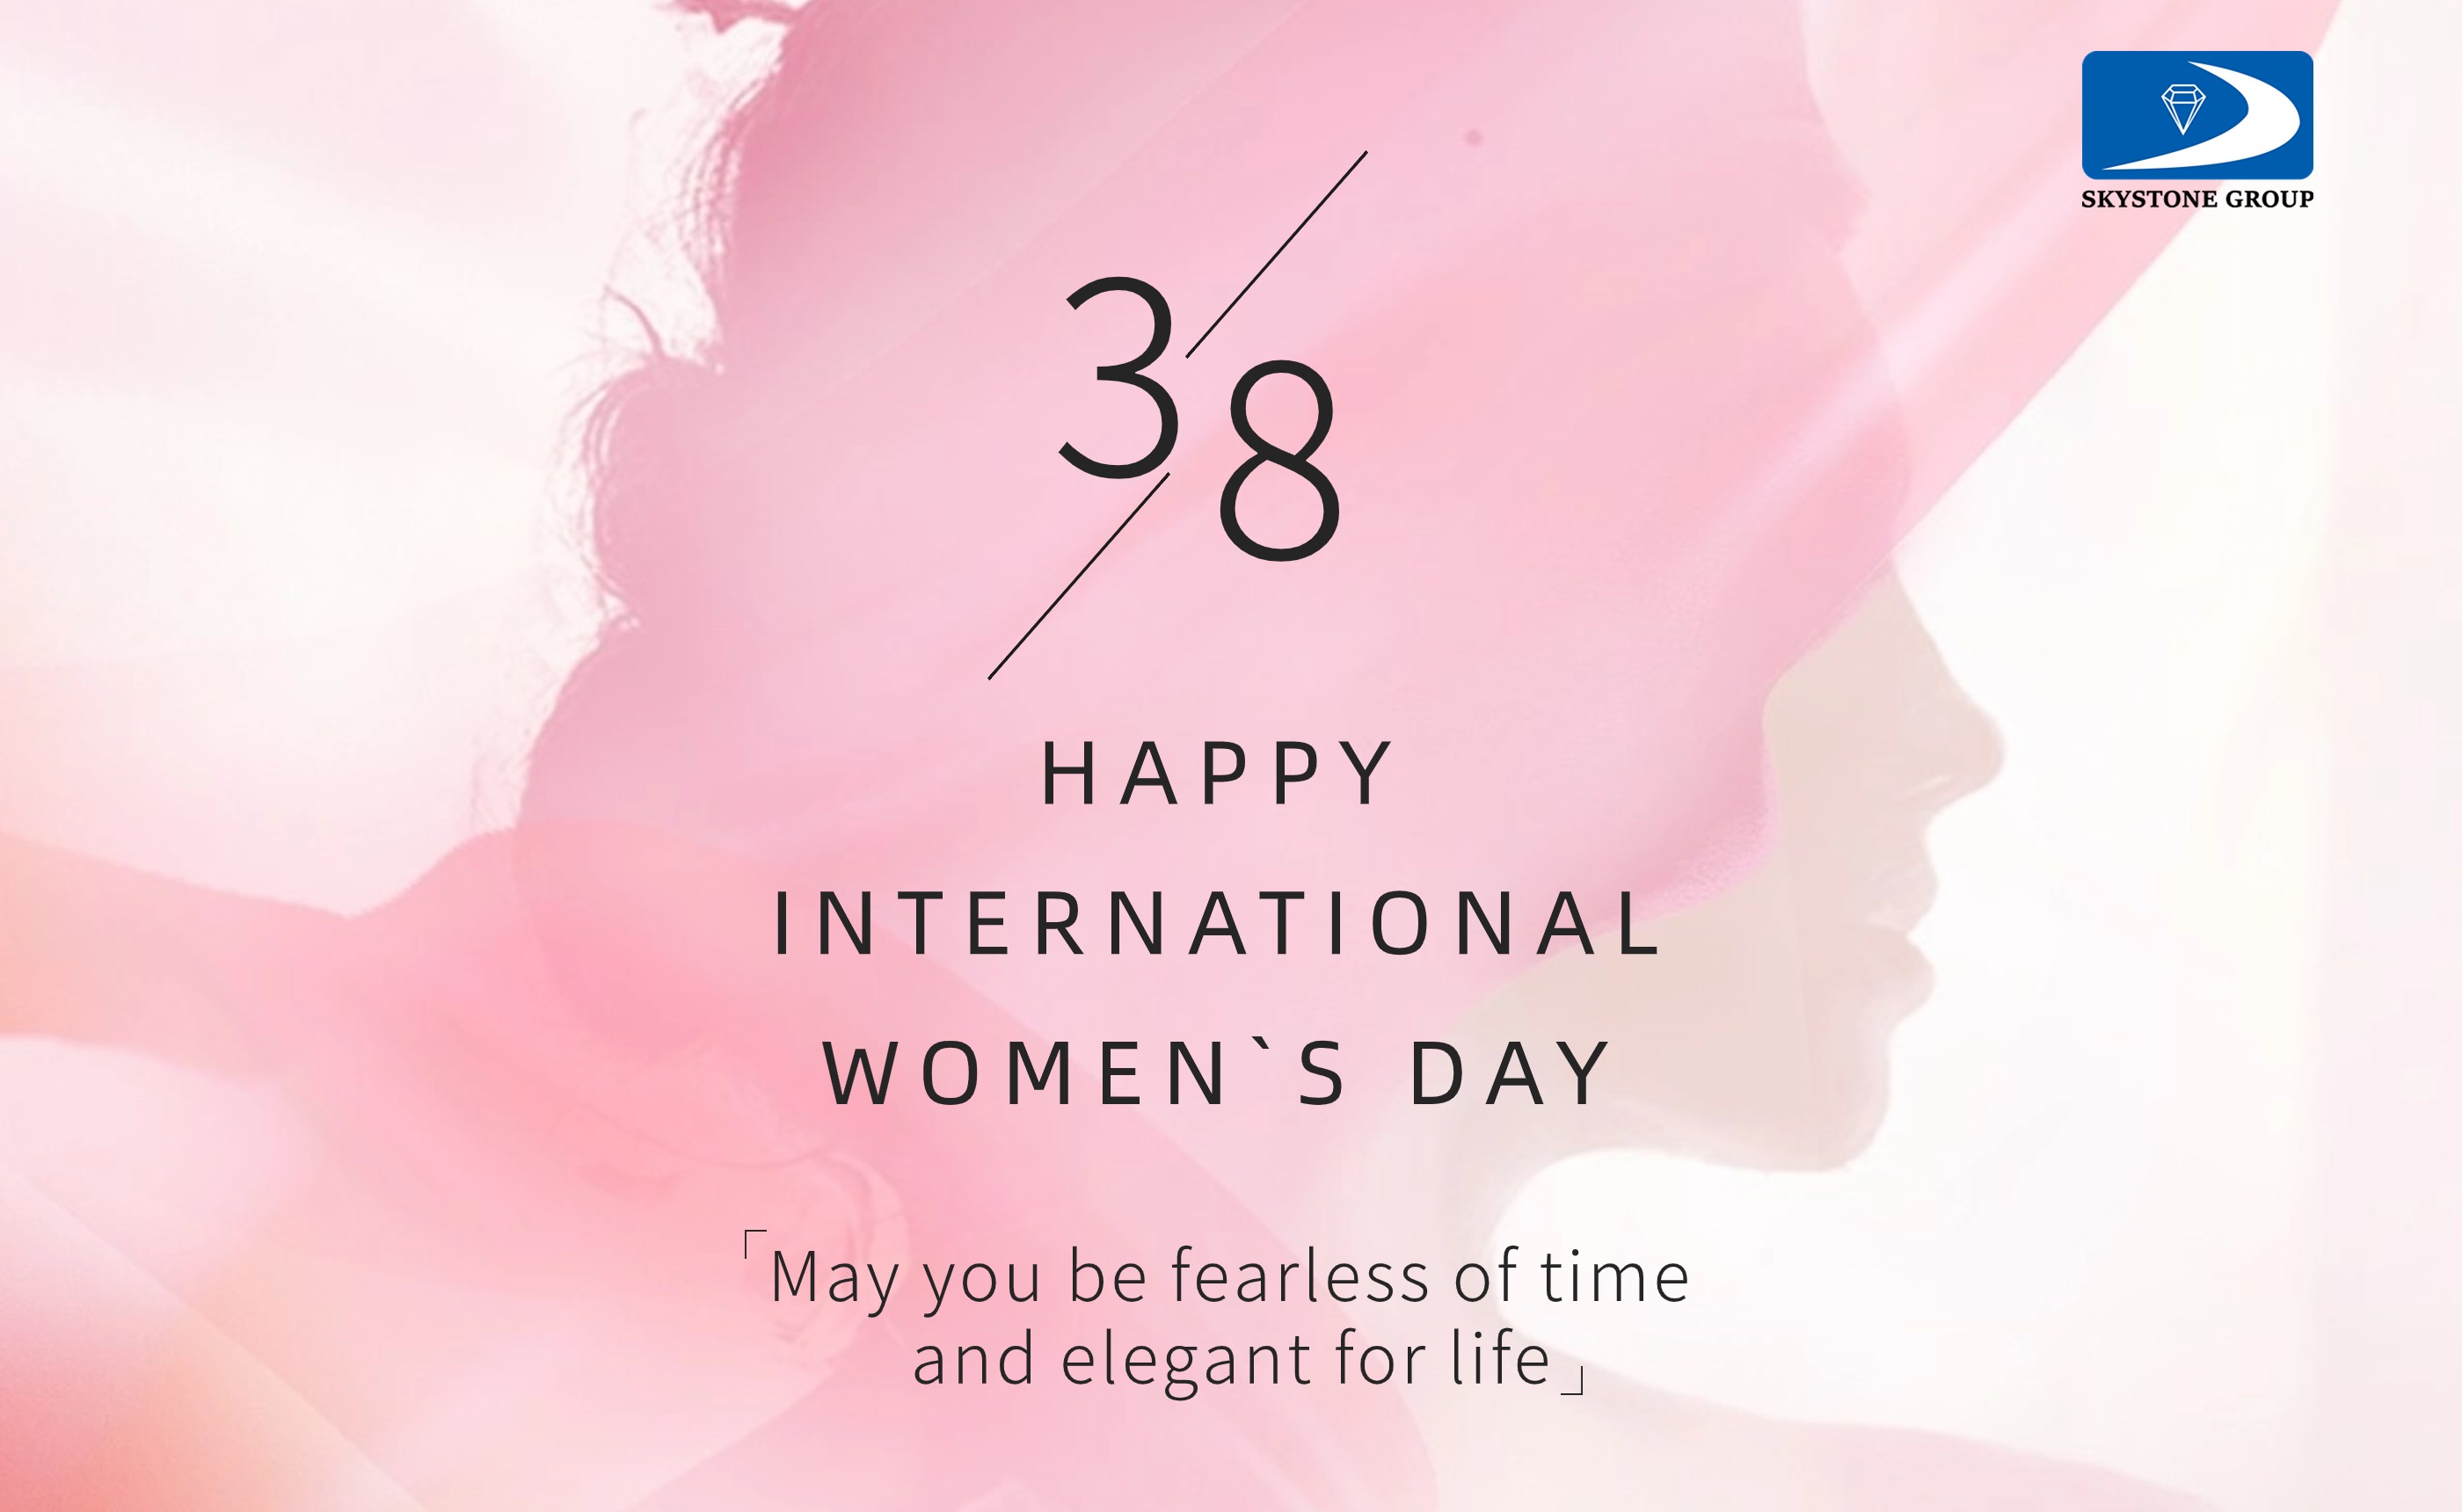 Happy international women's day!